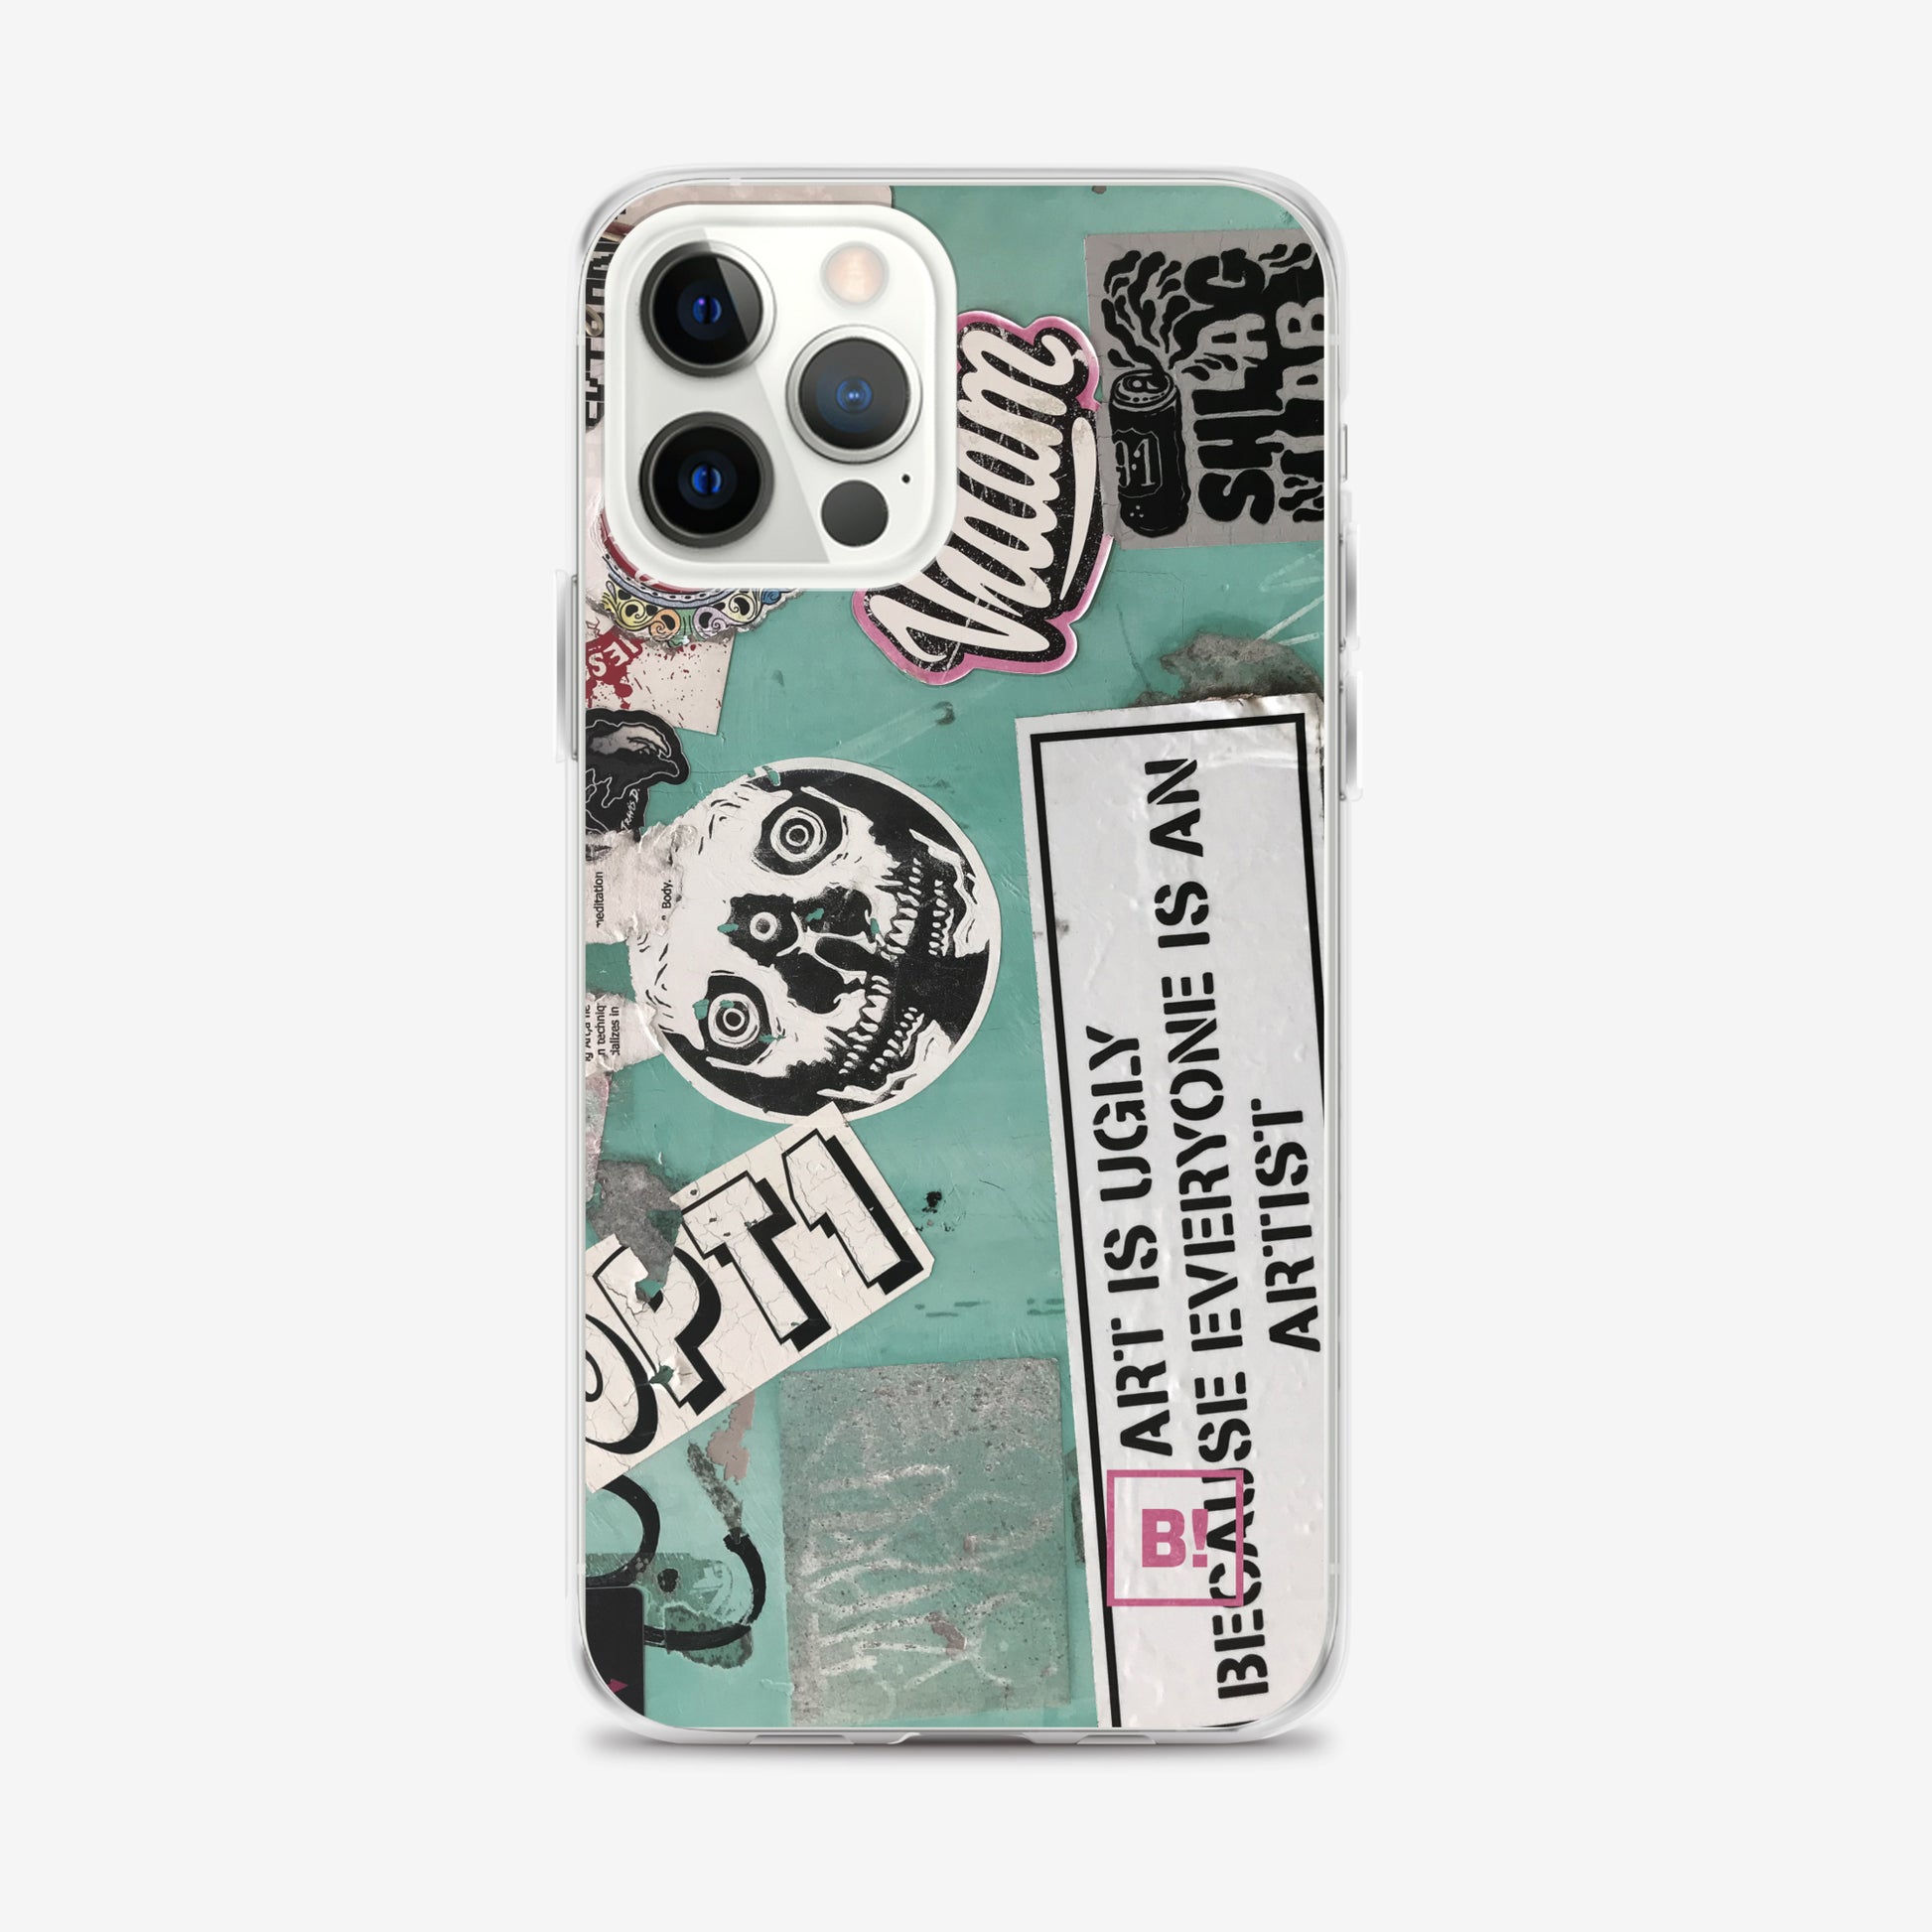 Binspired Art Is Ugly Urban Art iPhone 12 Pro Max Case